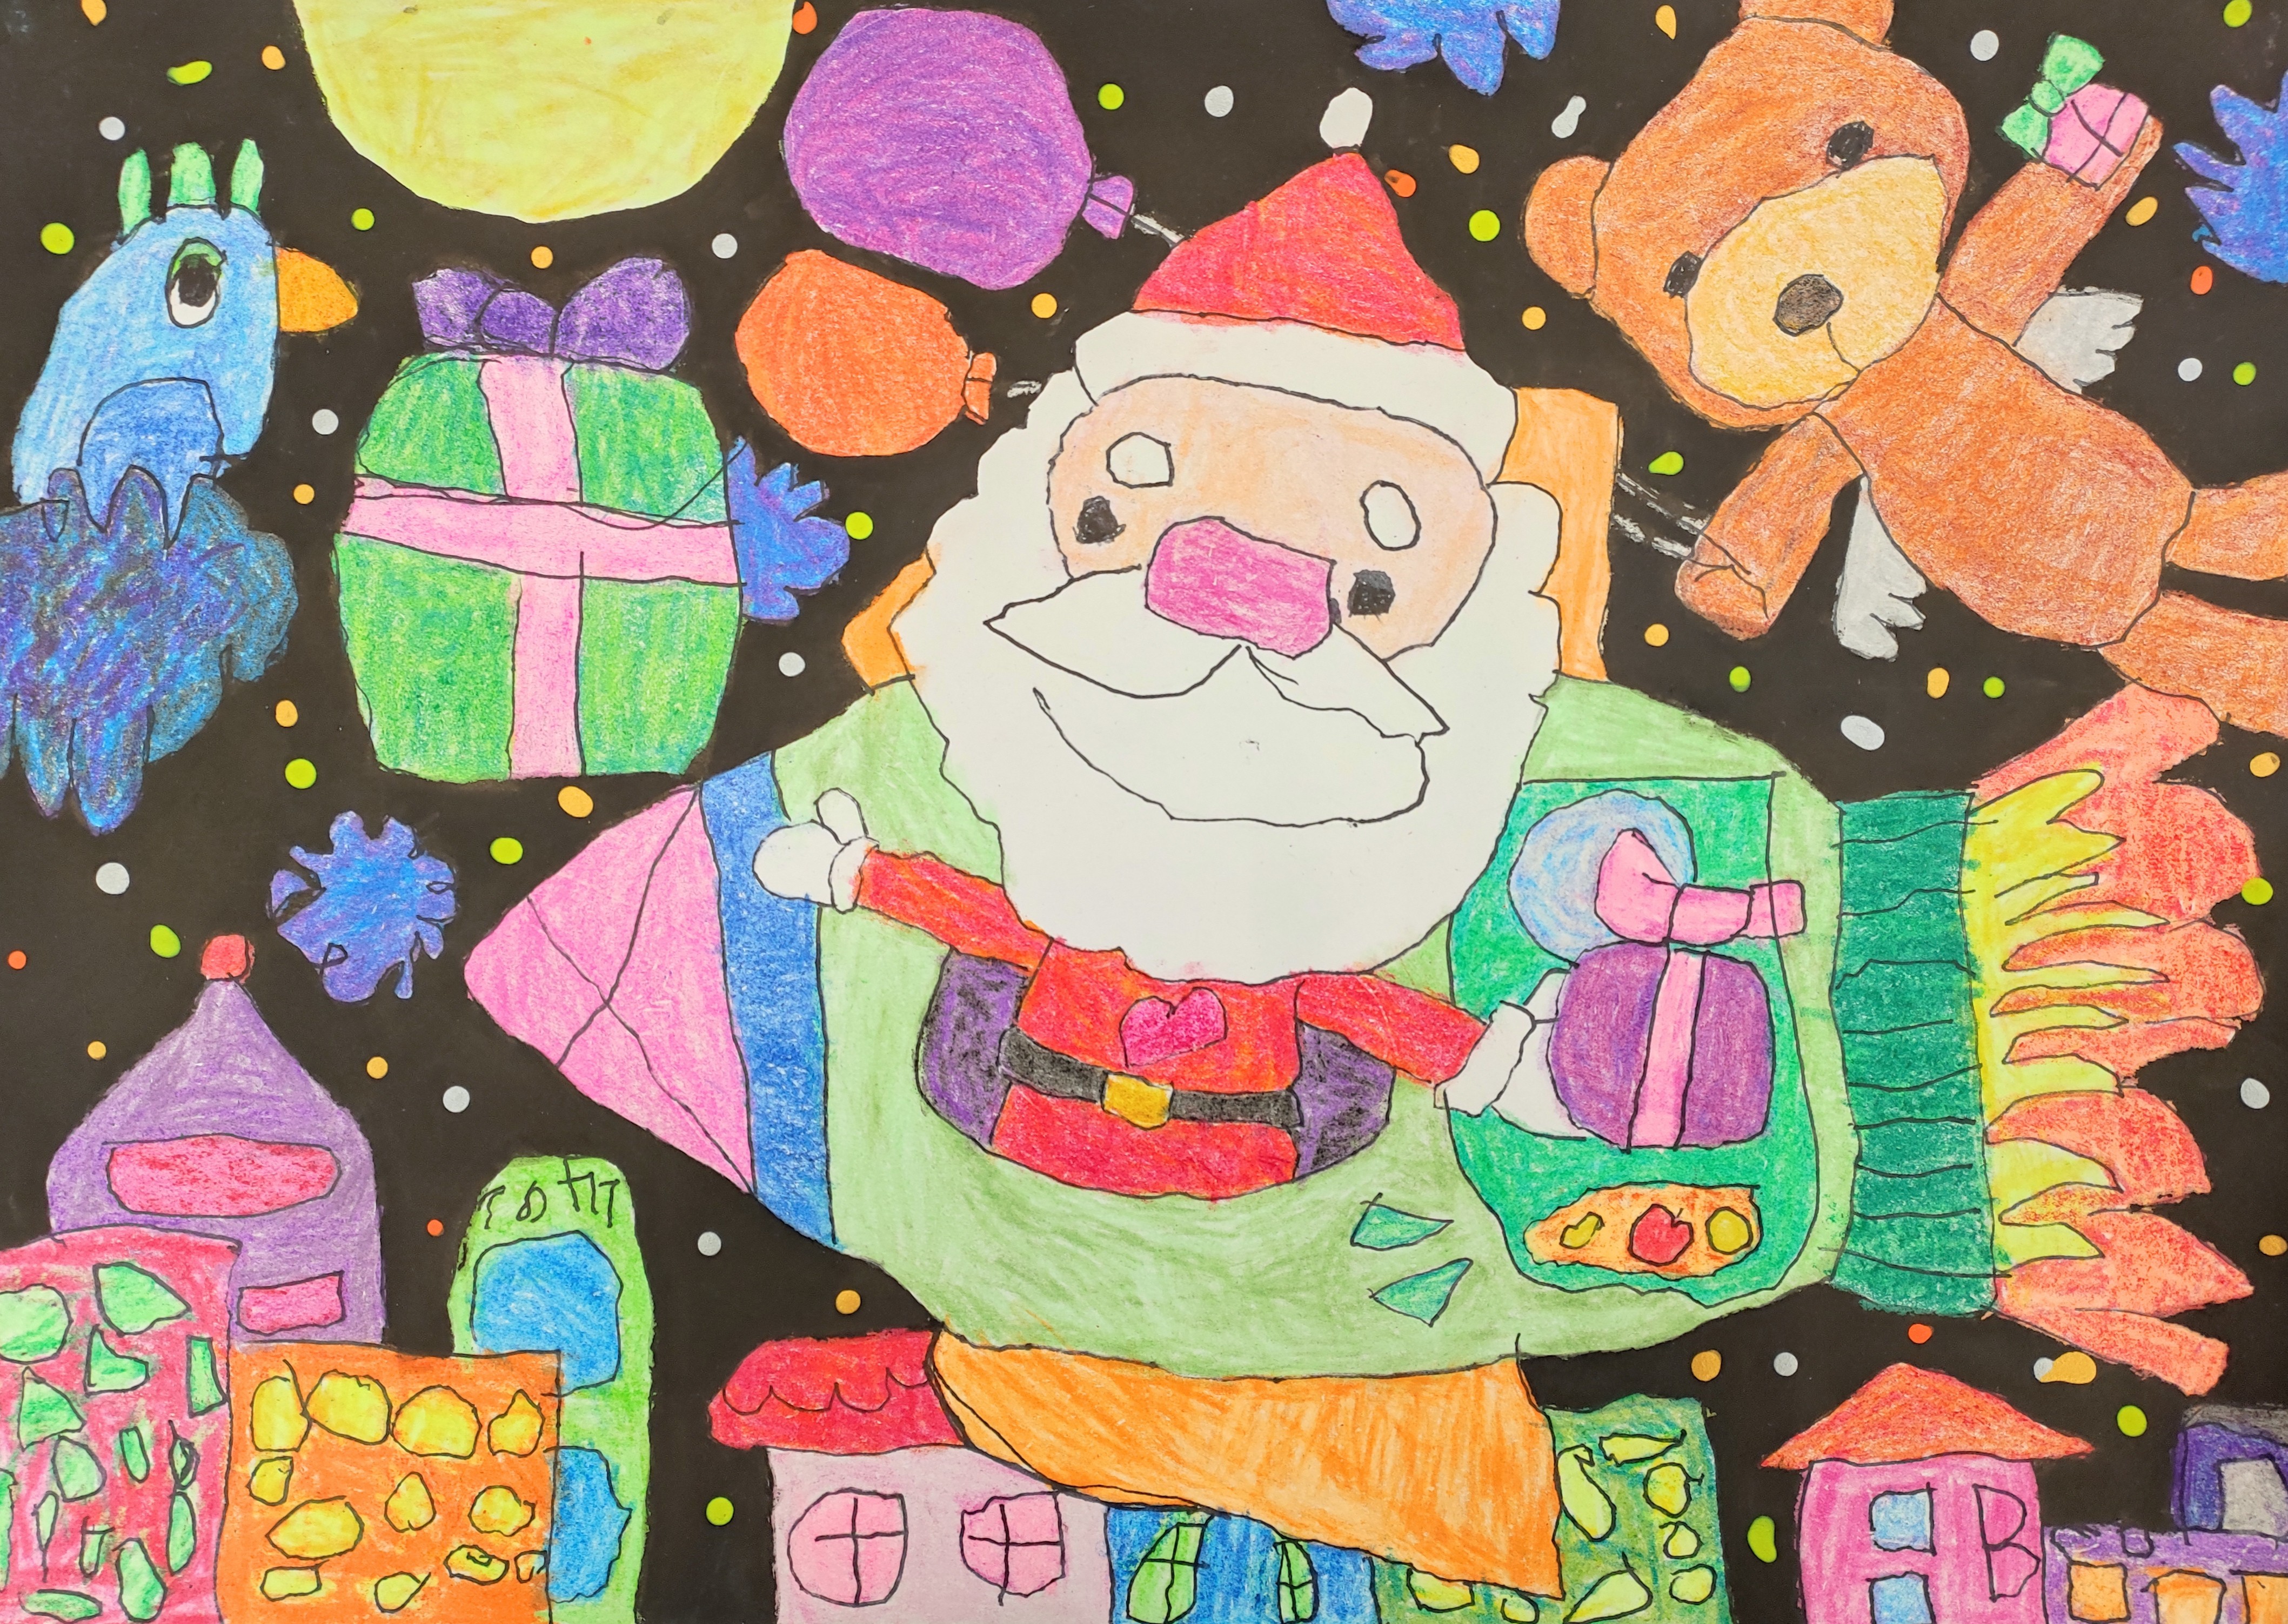 <div>繽紛聖誕-幼稚園初級組(K1至K2)-冠軍-陳愷淇</div>
<div></div>
<div>構圖設計豐富，色彩鮮豔，作品充滿著快樂的聖誕氣氛。</div>
<div>聖誕老人坐著火箭派聖誕禮物，造型可愛，想法新鮮，充滿創意。</div>
<div>小熊亦帶著氫氣球成為聖誕老人的助手，令構圖更豐富。</div>
<div>愷淇很聰明地運用了黑色的夜景，襯托出主體，使主題更突出。</div>